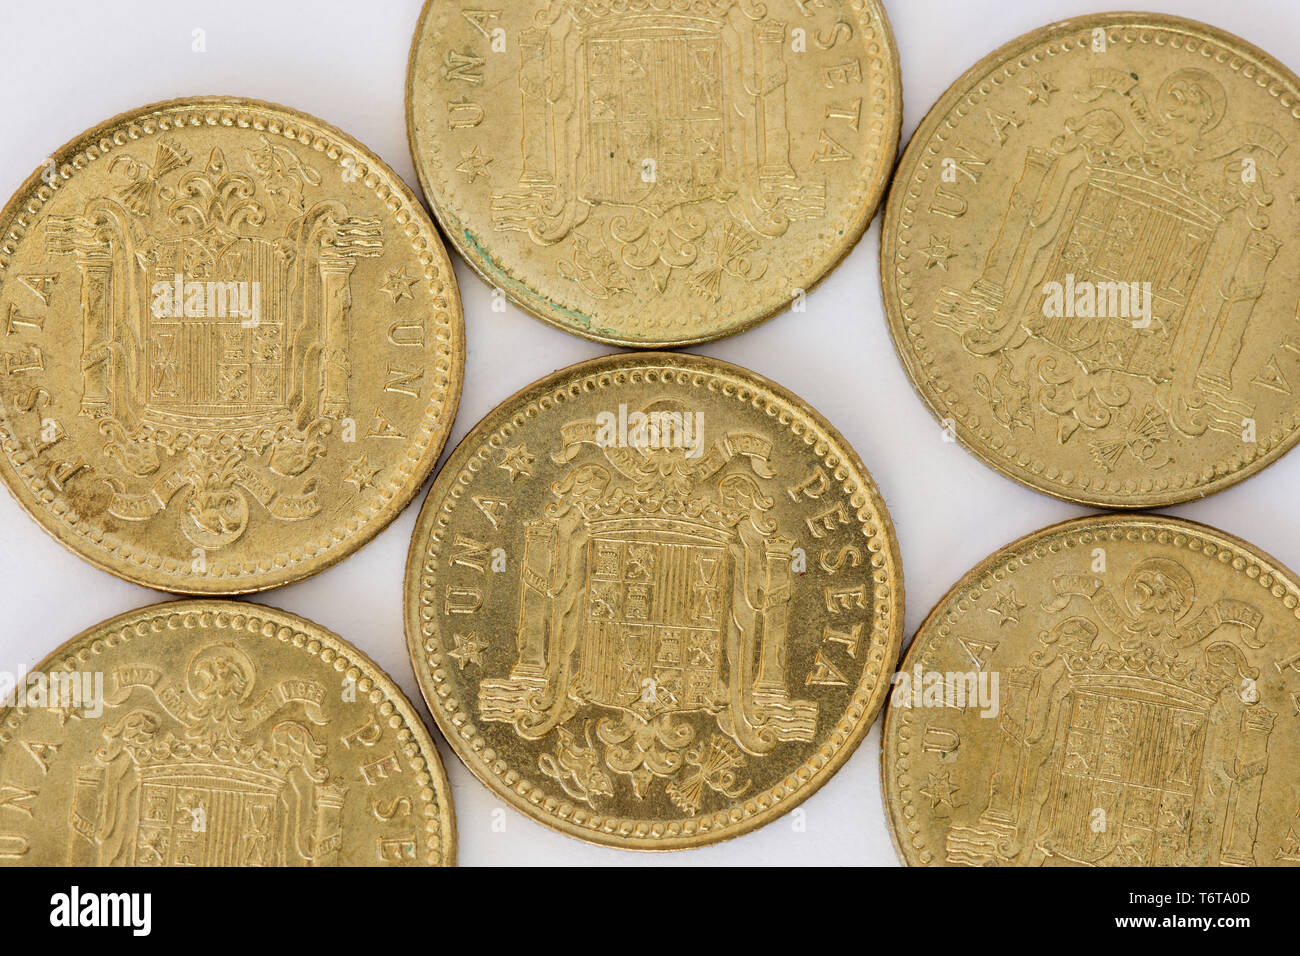 Several Spanish coins - 1 peseta Stock Photo